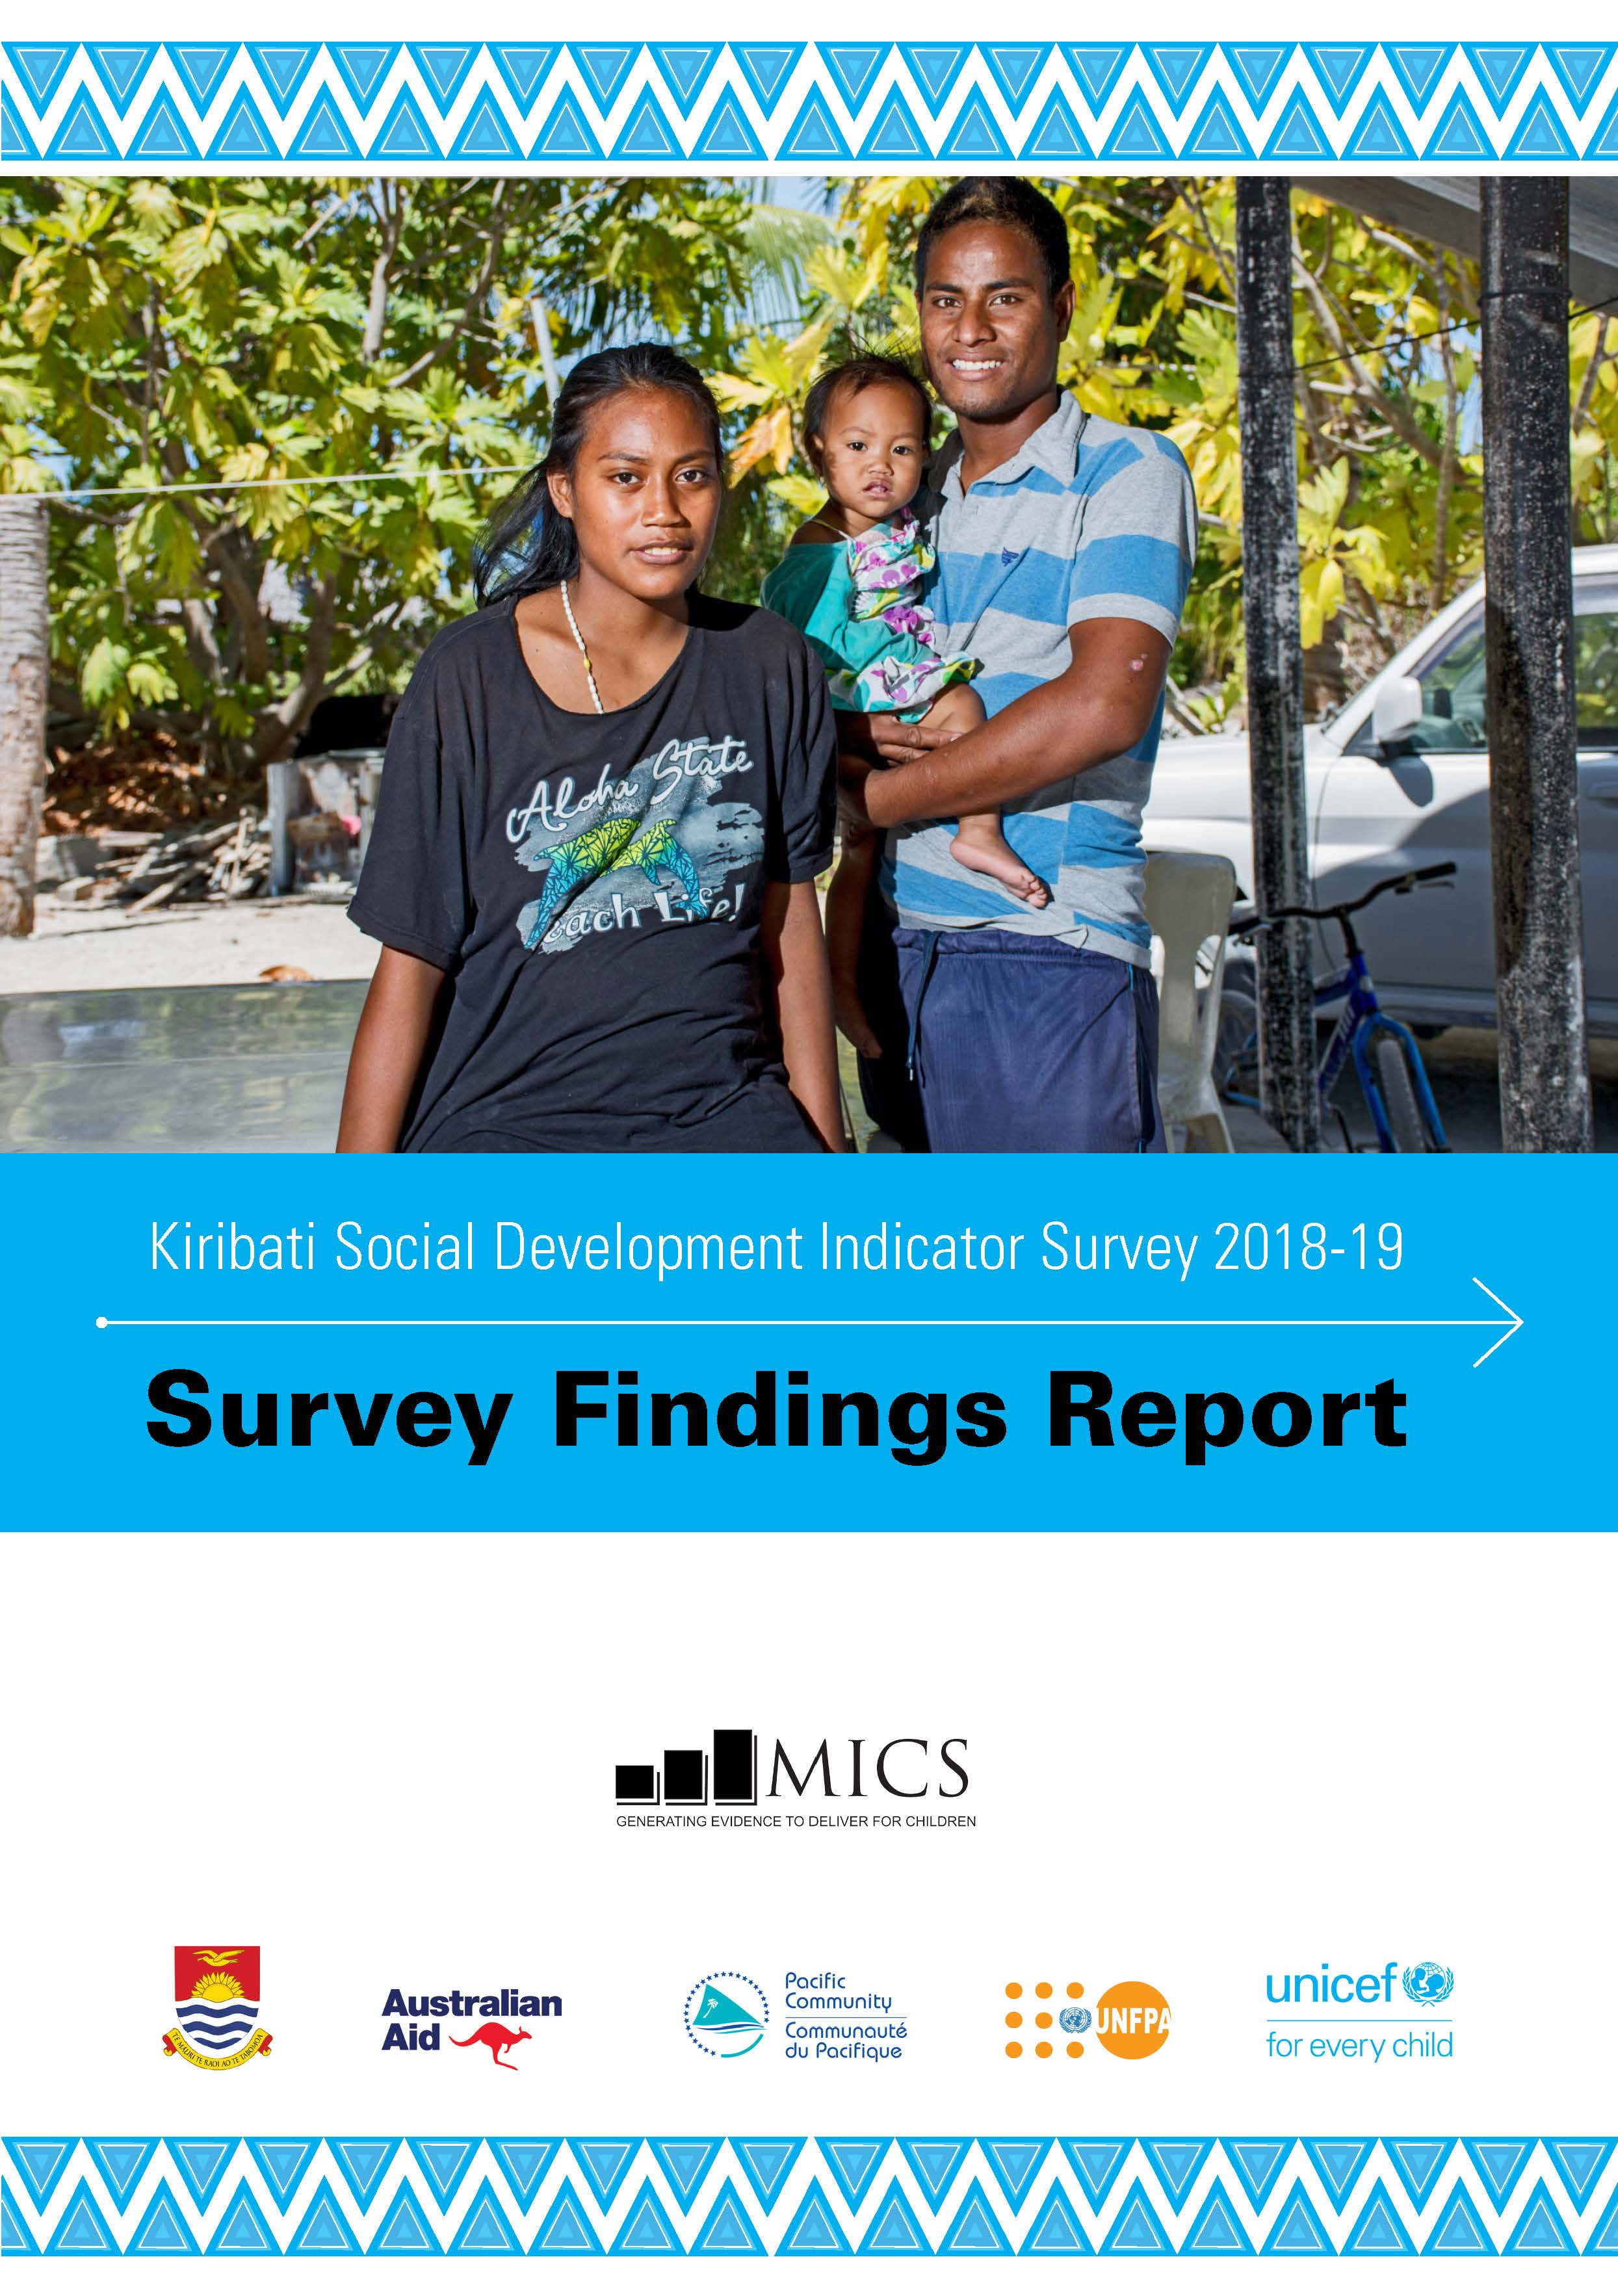 Kiribati Social Development Indicator Survey 2018-19 Findings Report